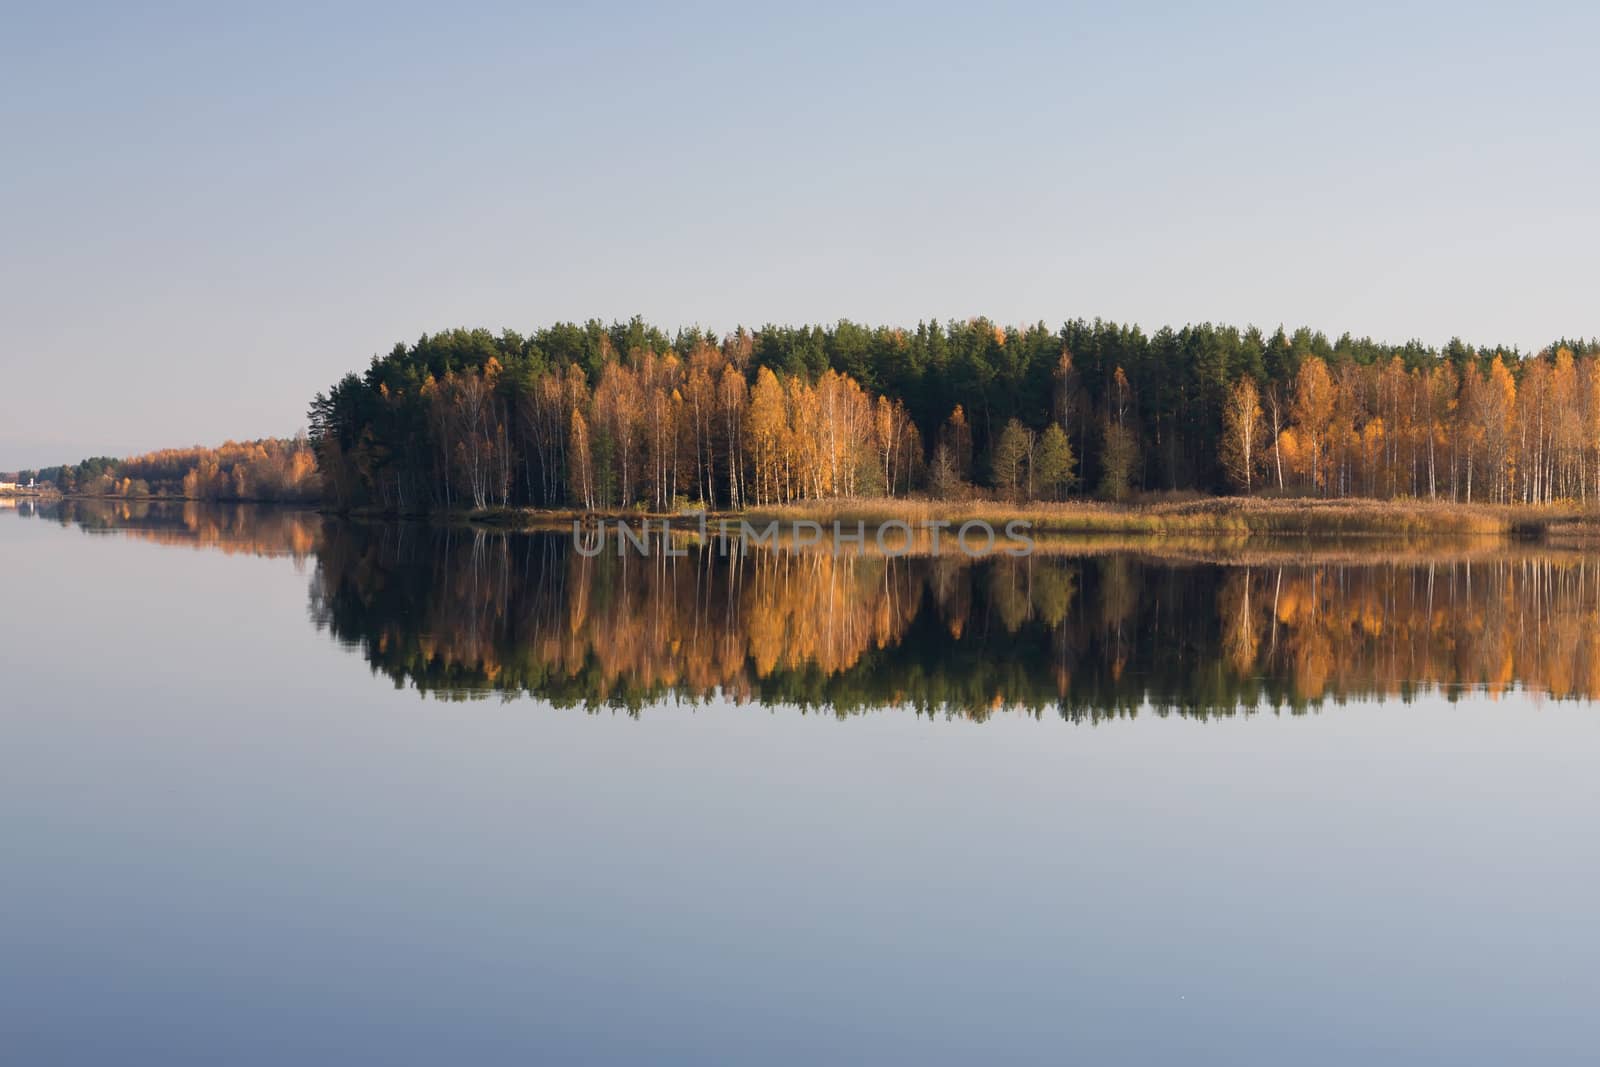 autumn lake forest